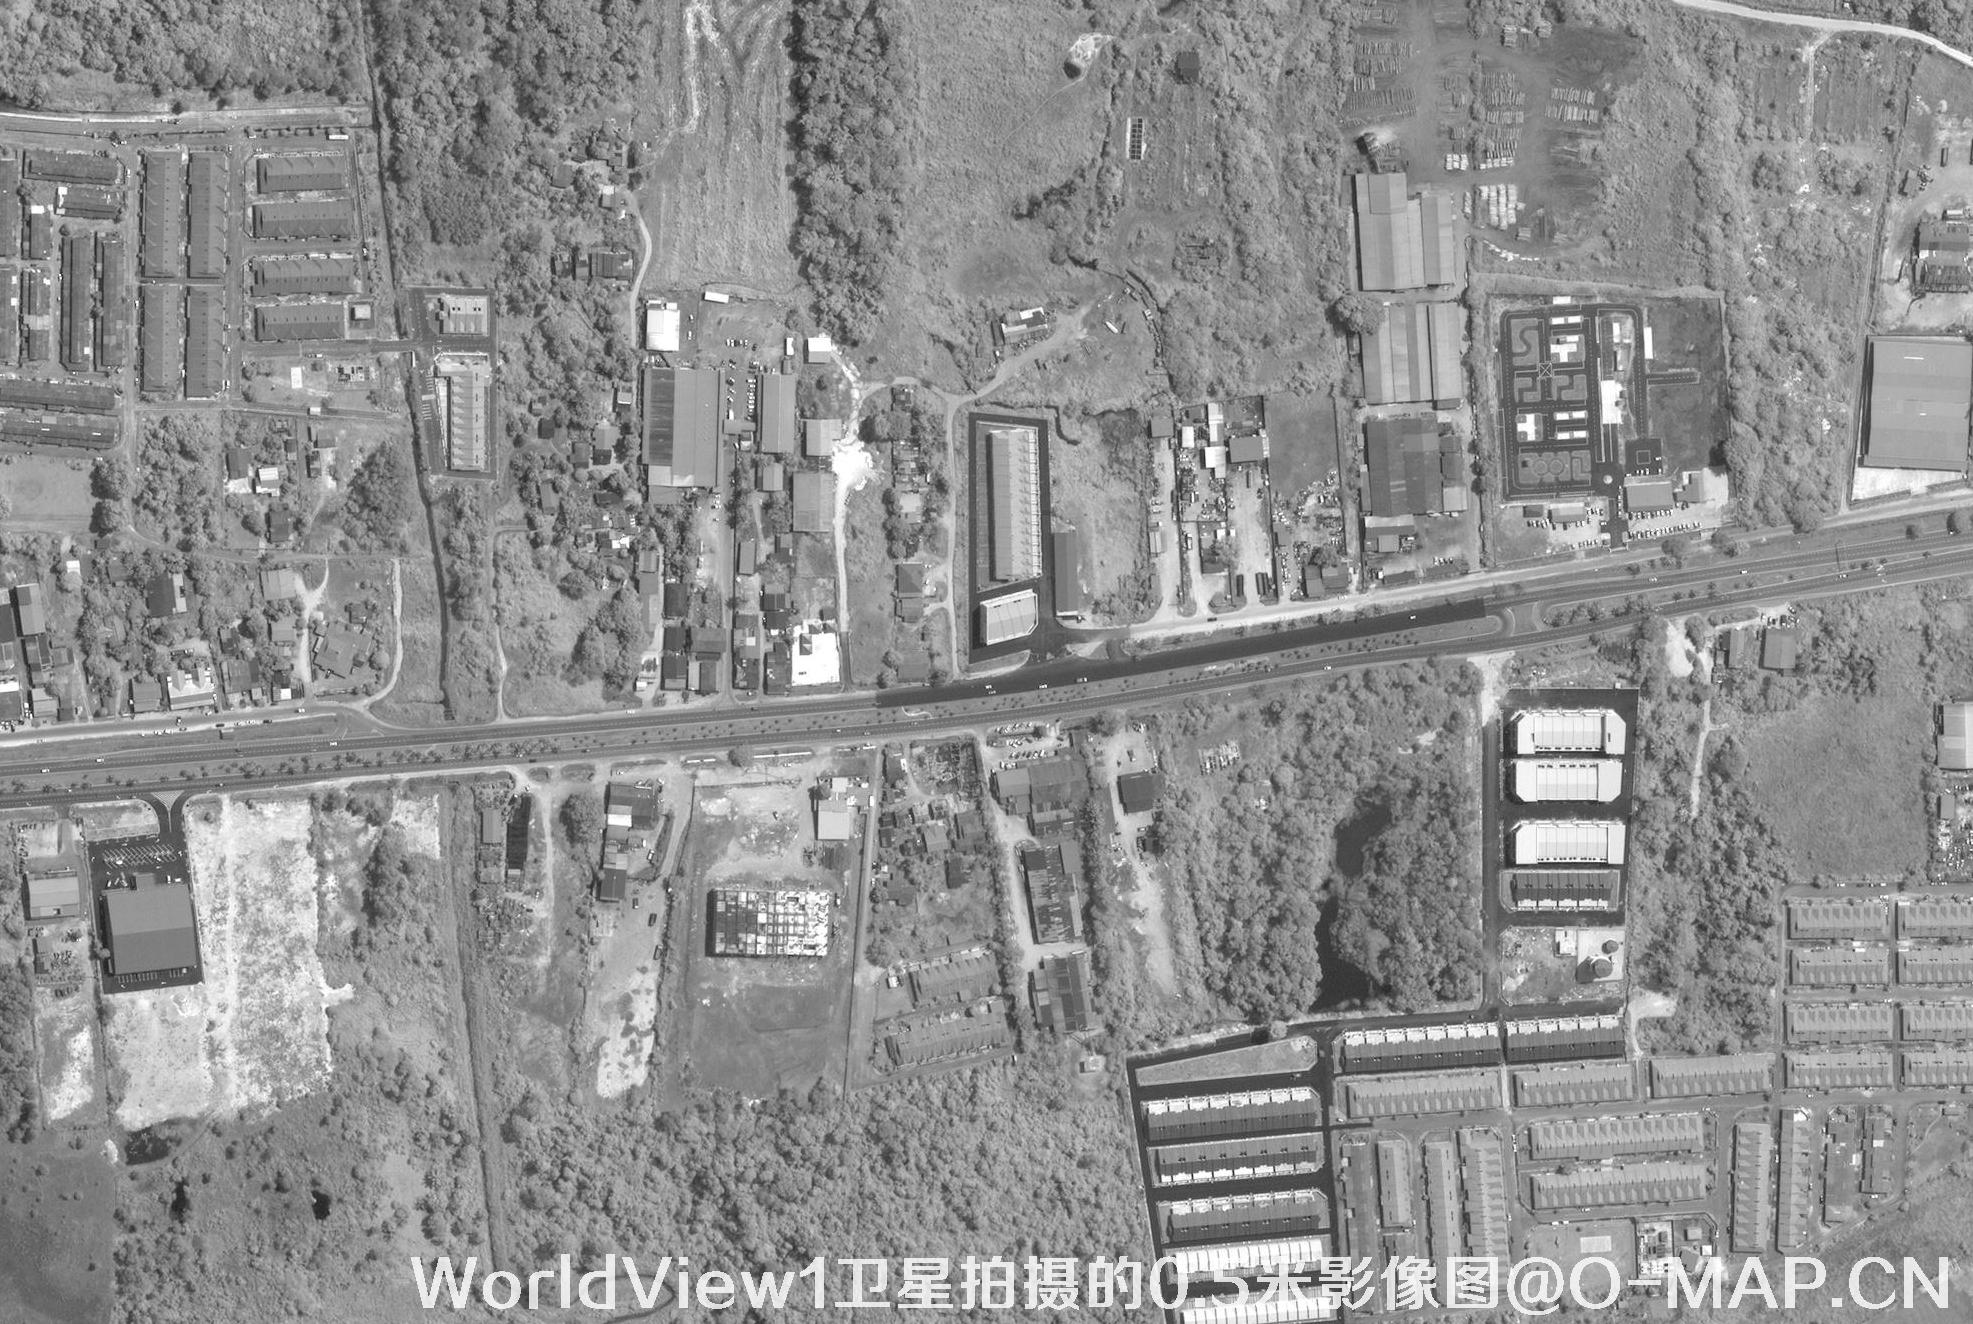 WorldView1卫星拍摄的0.5米黑白影像图